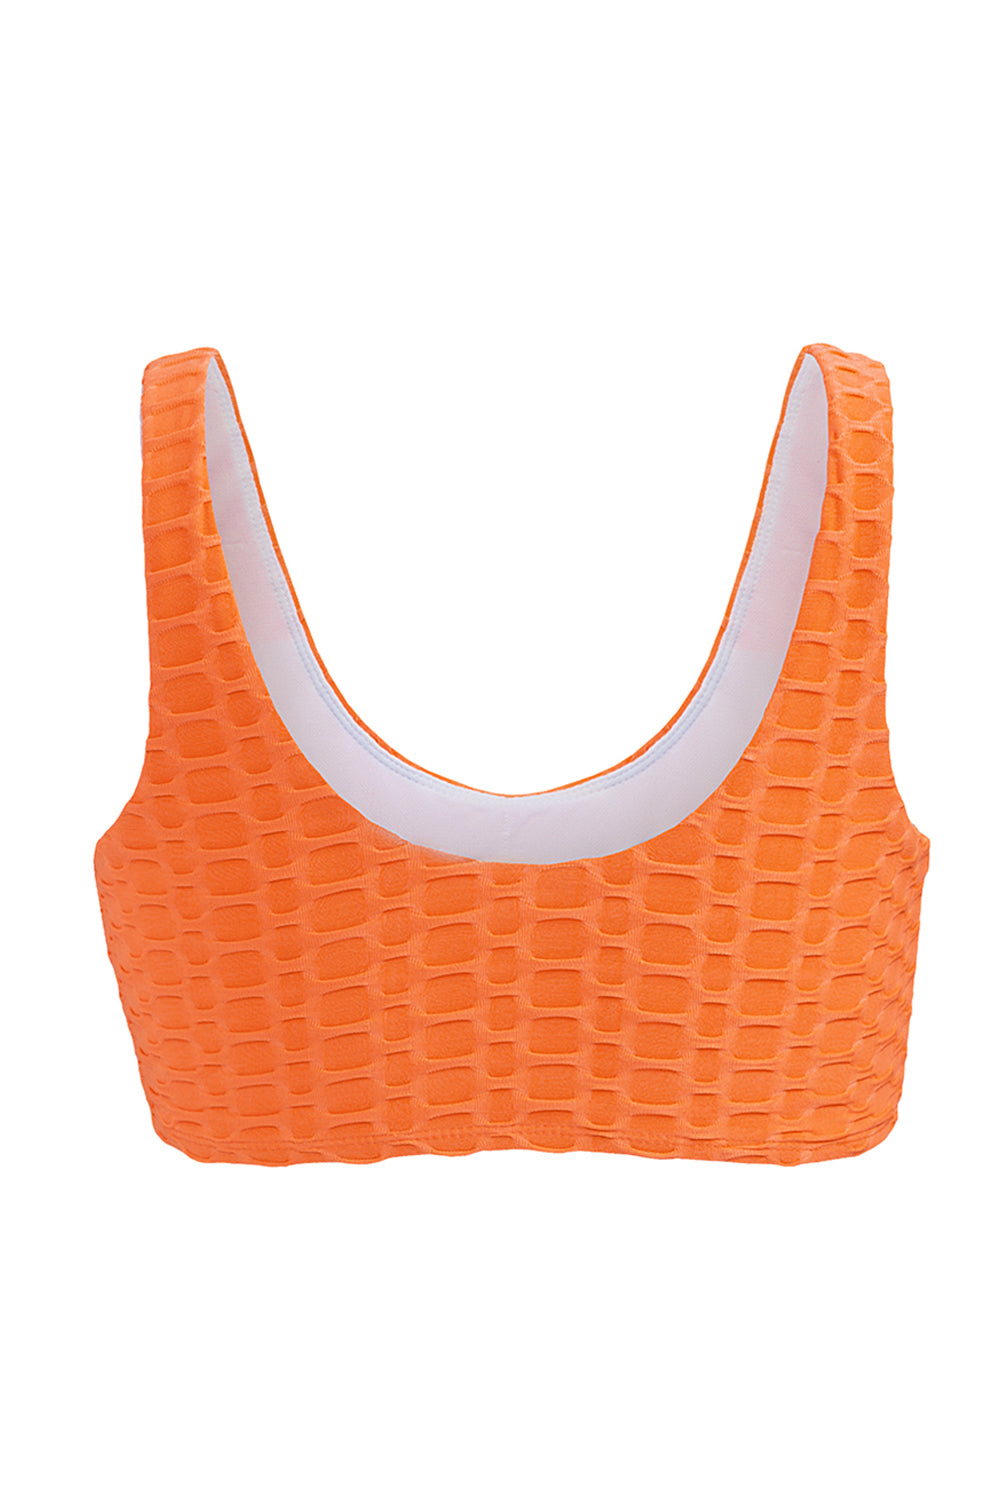 Orange Honey Comb Textured Swim Top